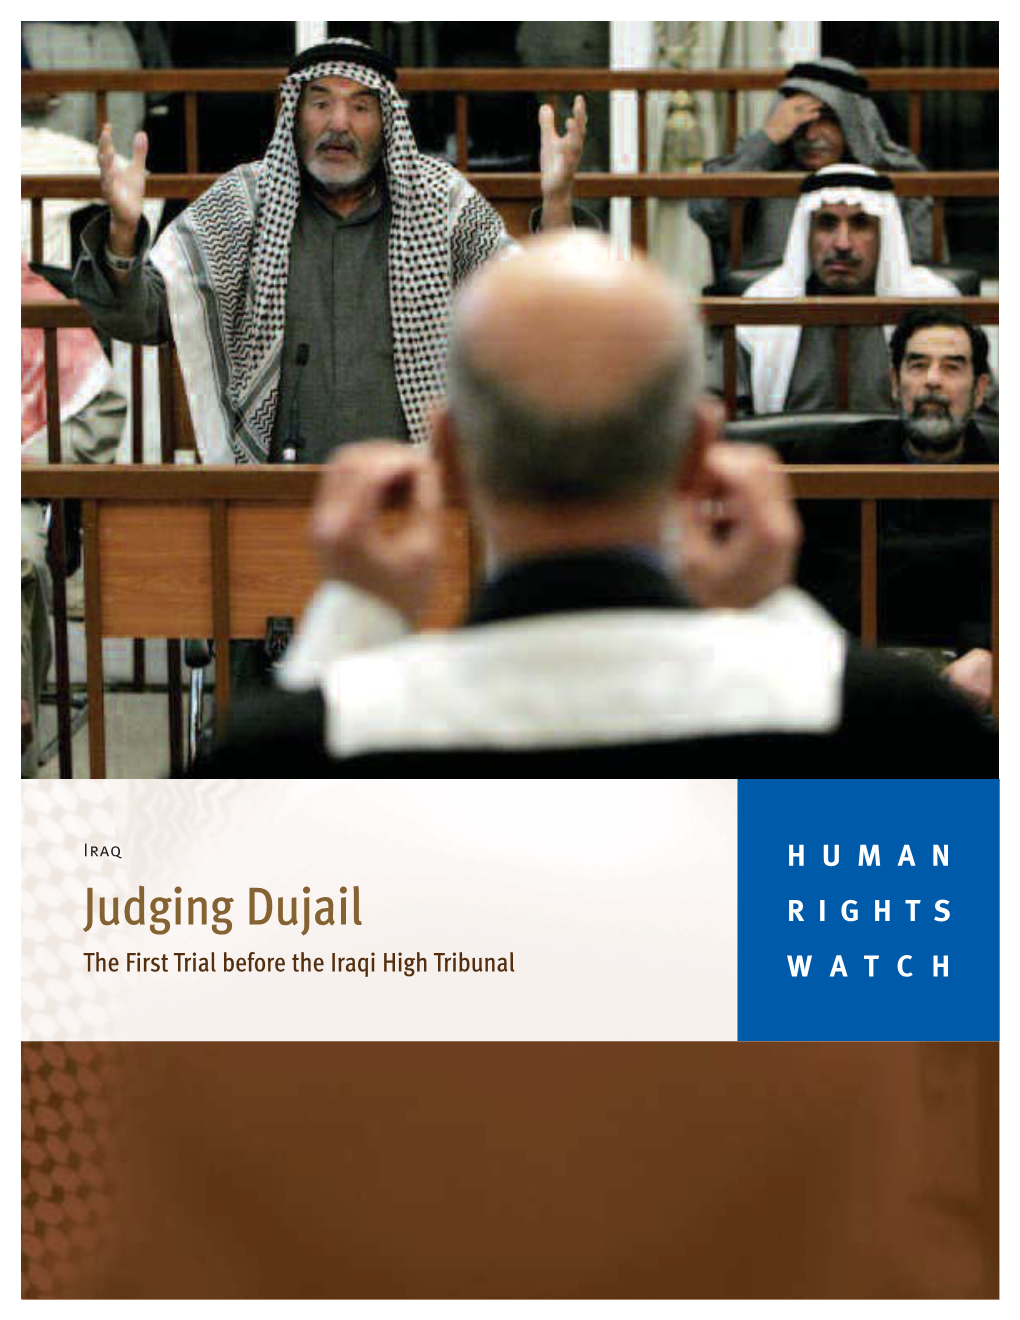 Iraq HUMAN Judging Dujail RIGHTS the First Trial Before the Iraqi High Tribunal WATCH November 2006 Volume 18, No